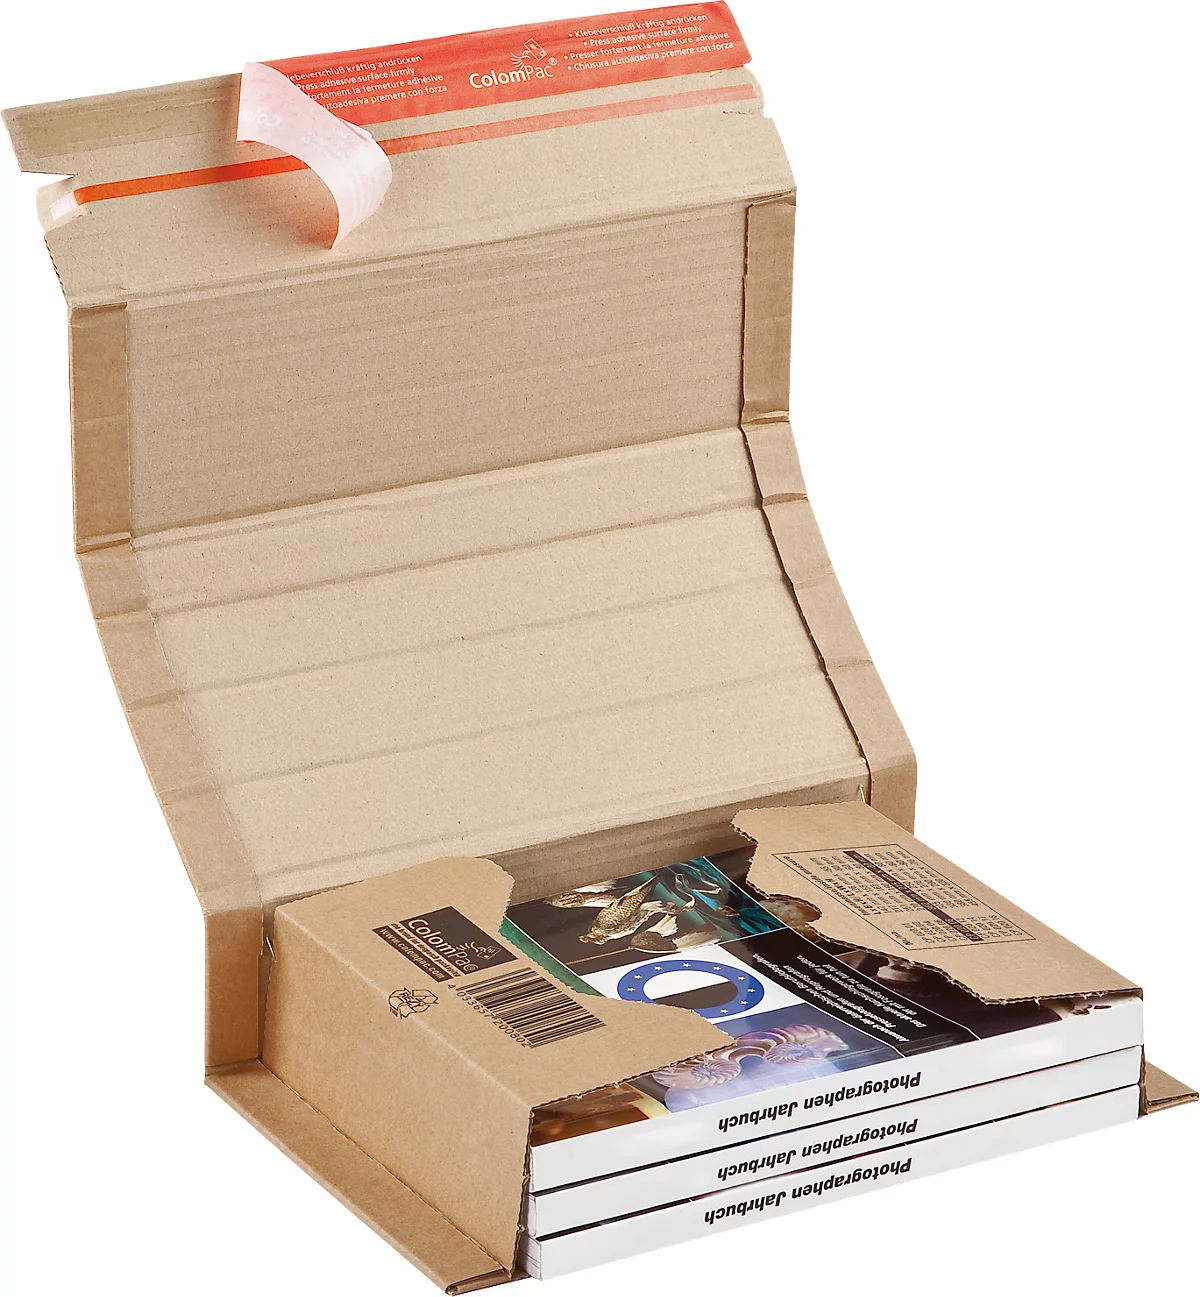 Embalaje envolvente ColomPac CP 020, con precinto autoadhesivo, cartón ondulado, marrón, An 353 x Pr 225 x Al 100 mm (A4), 20 piezas